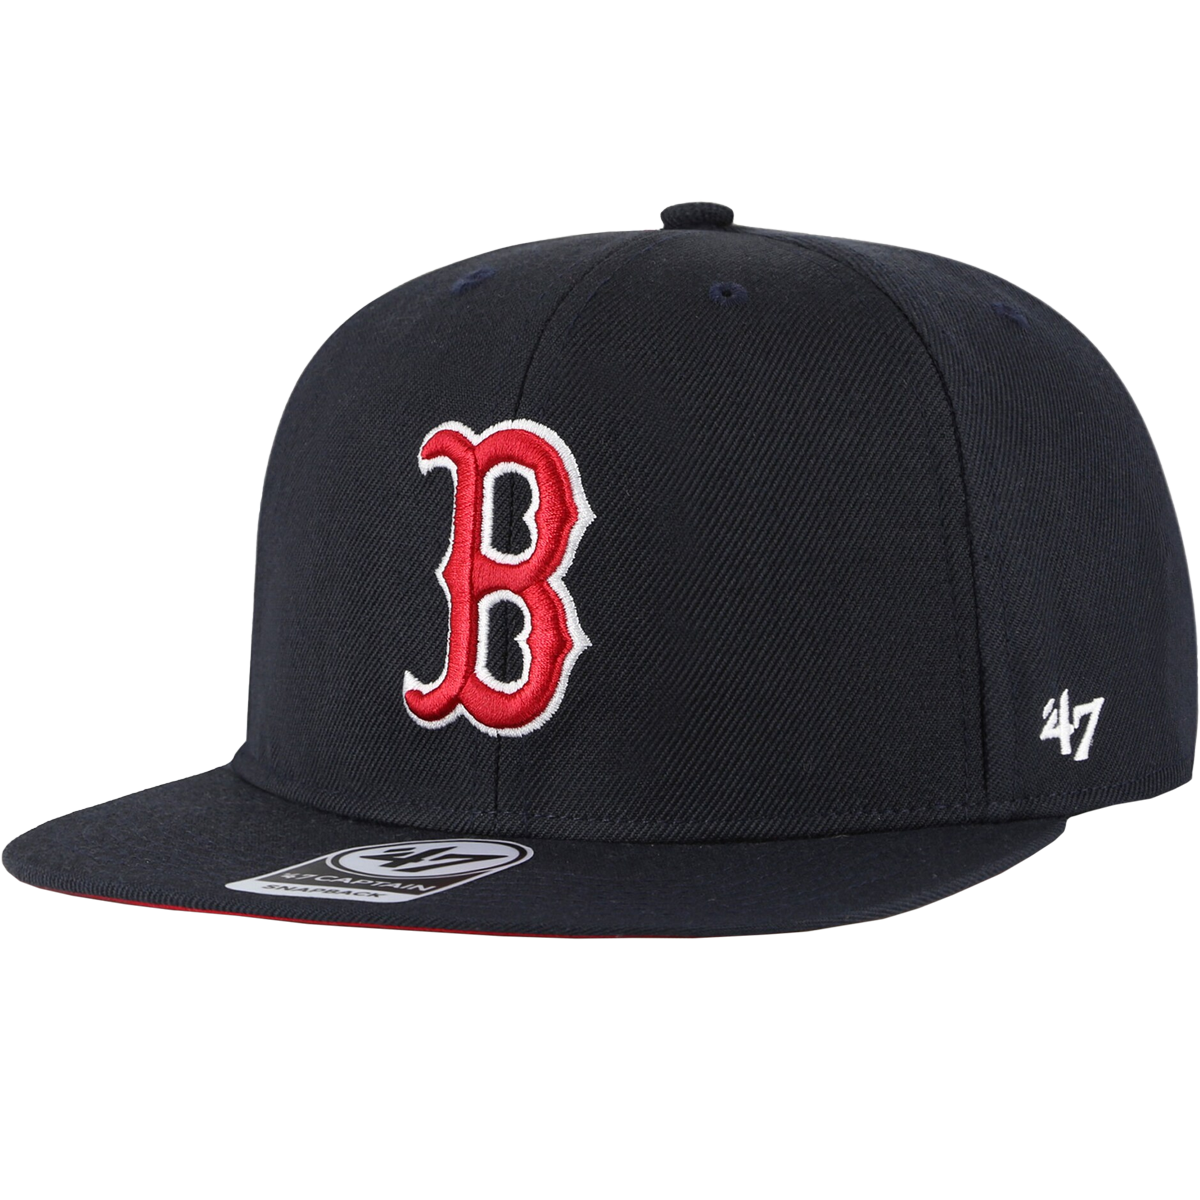 MLB Boston Red Sox T-Shirt Big and Tall Tee Alternate B Logo Choose  Size/Color